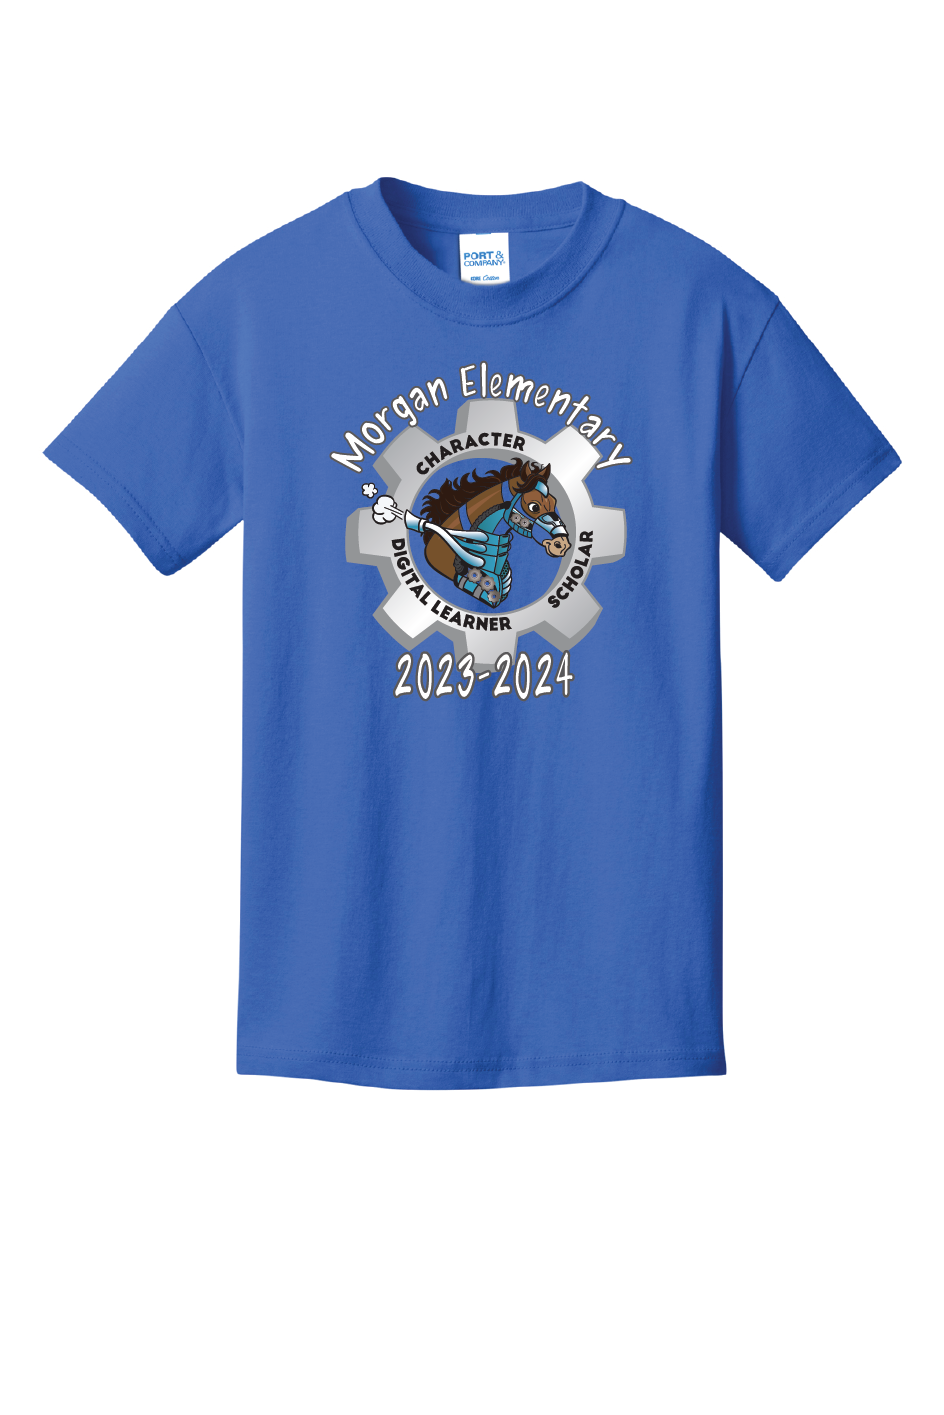 Morgan Elementary 2023-2024 school year shirt